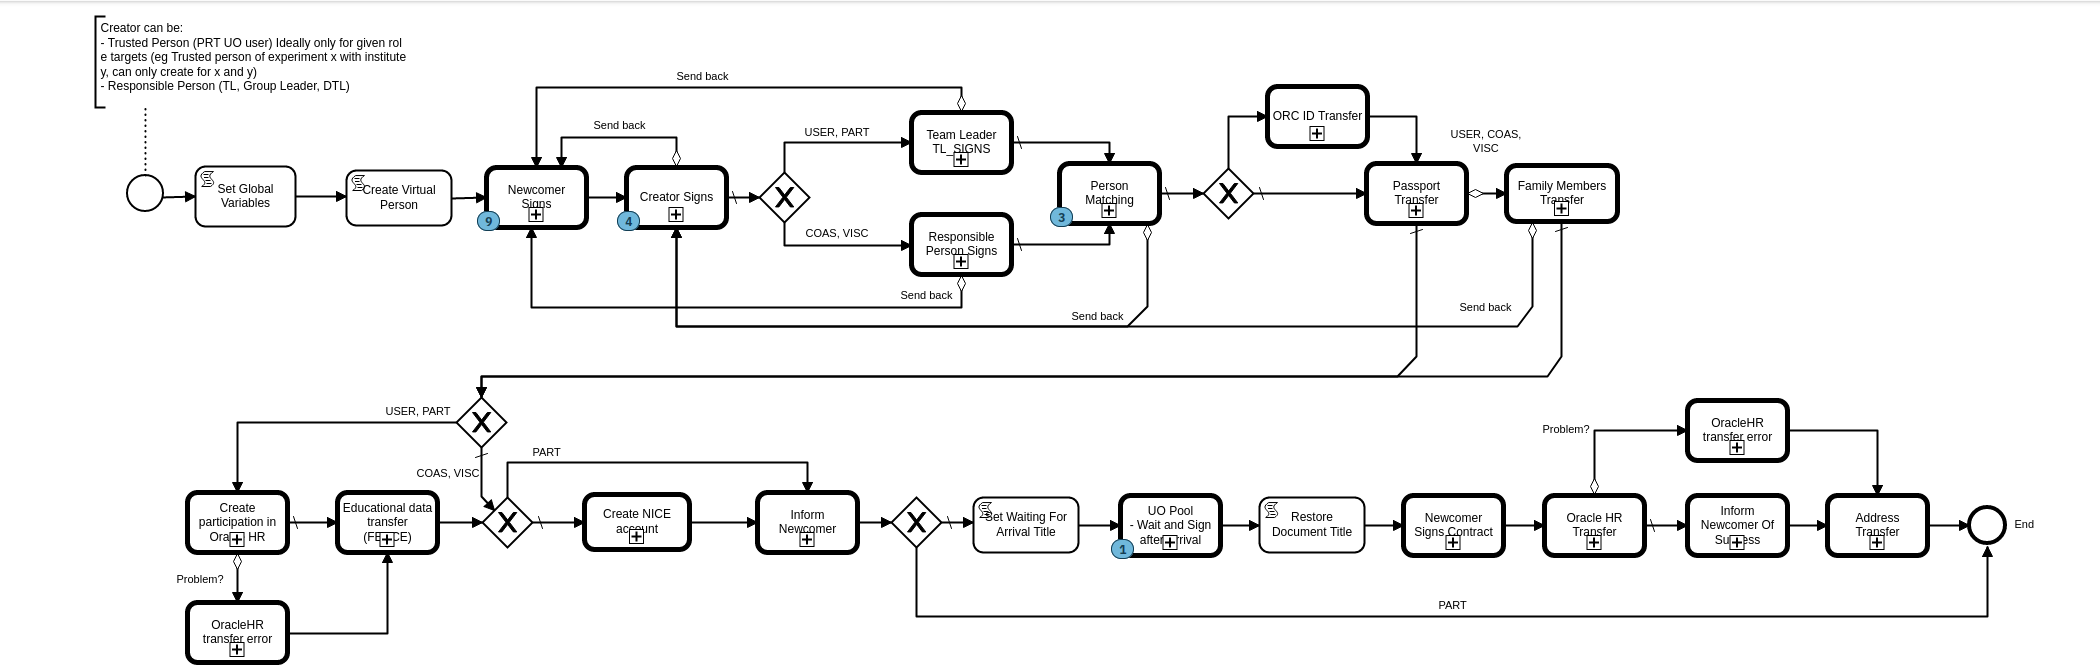 EDH PREG Workflow Diagram